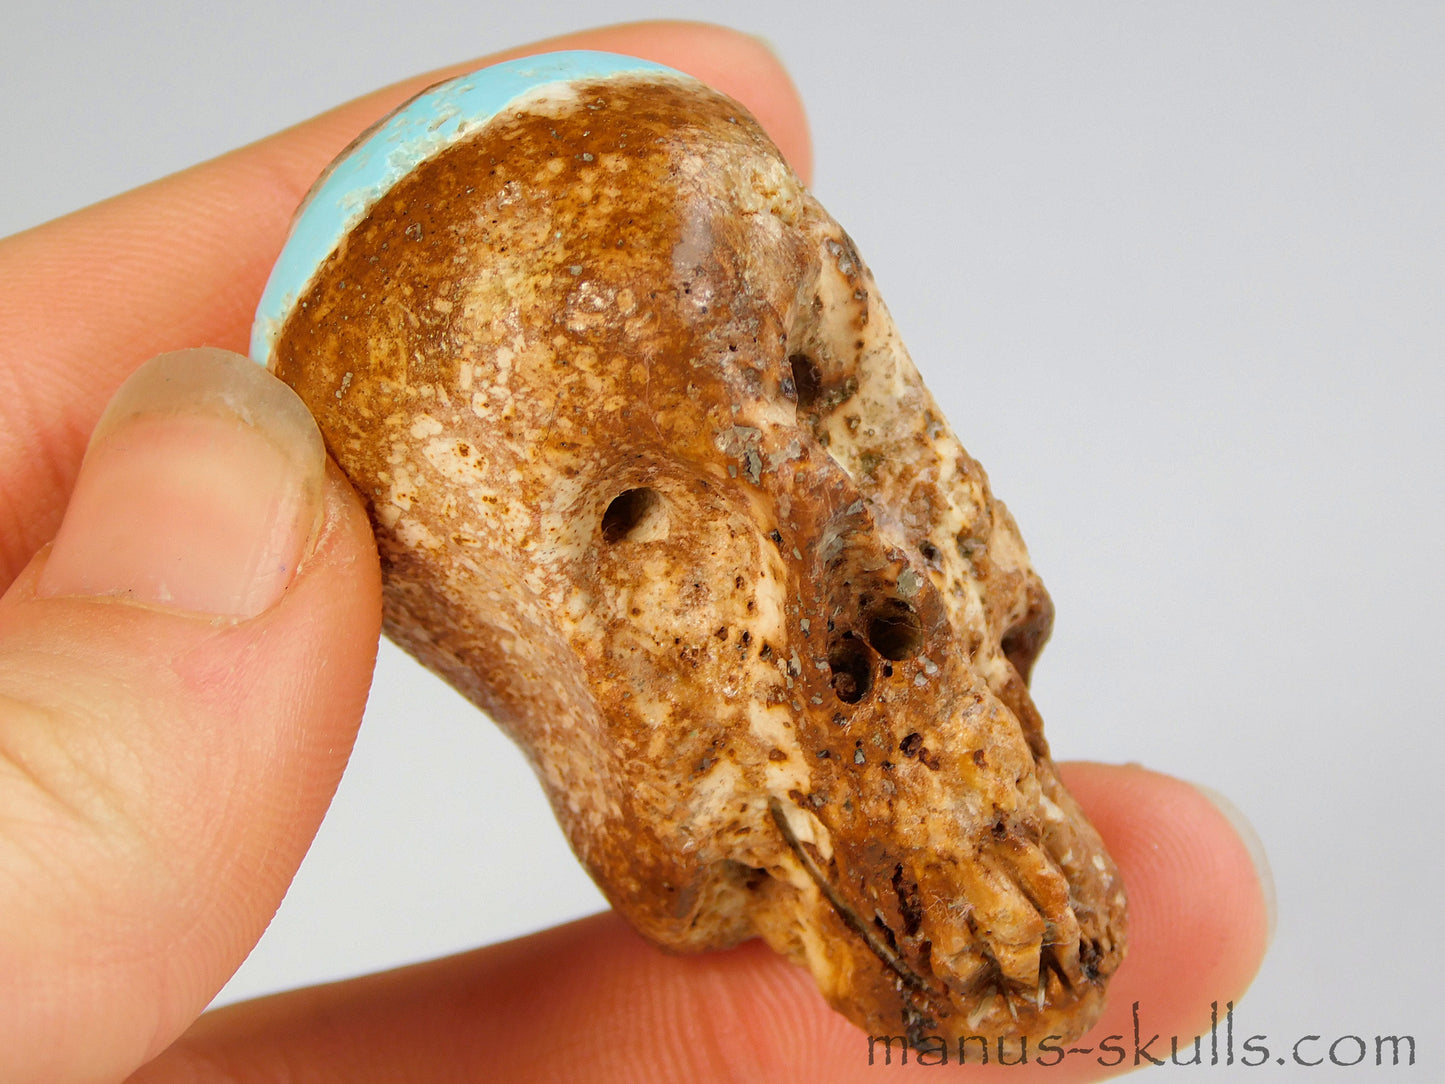 Turquois Skull